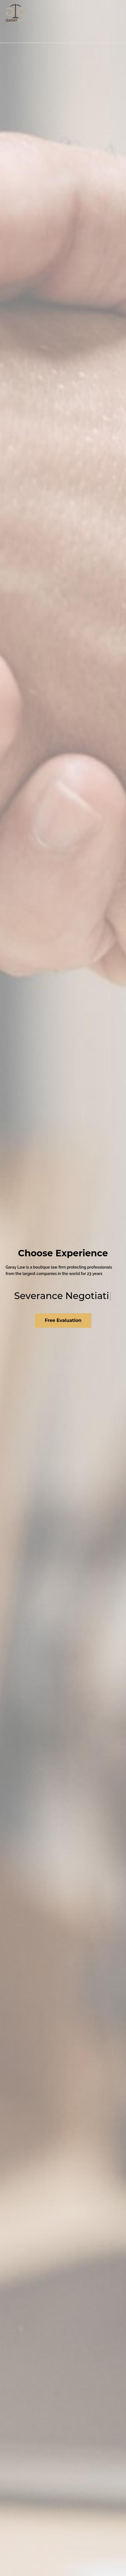 Garay Law - San Diego CA Lawyers